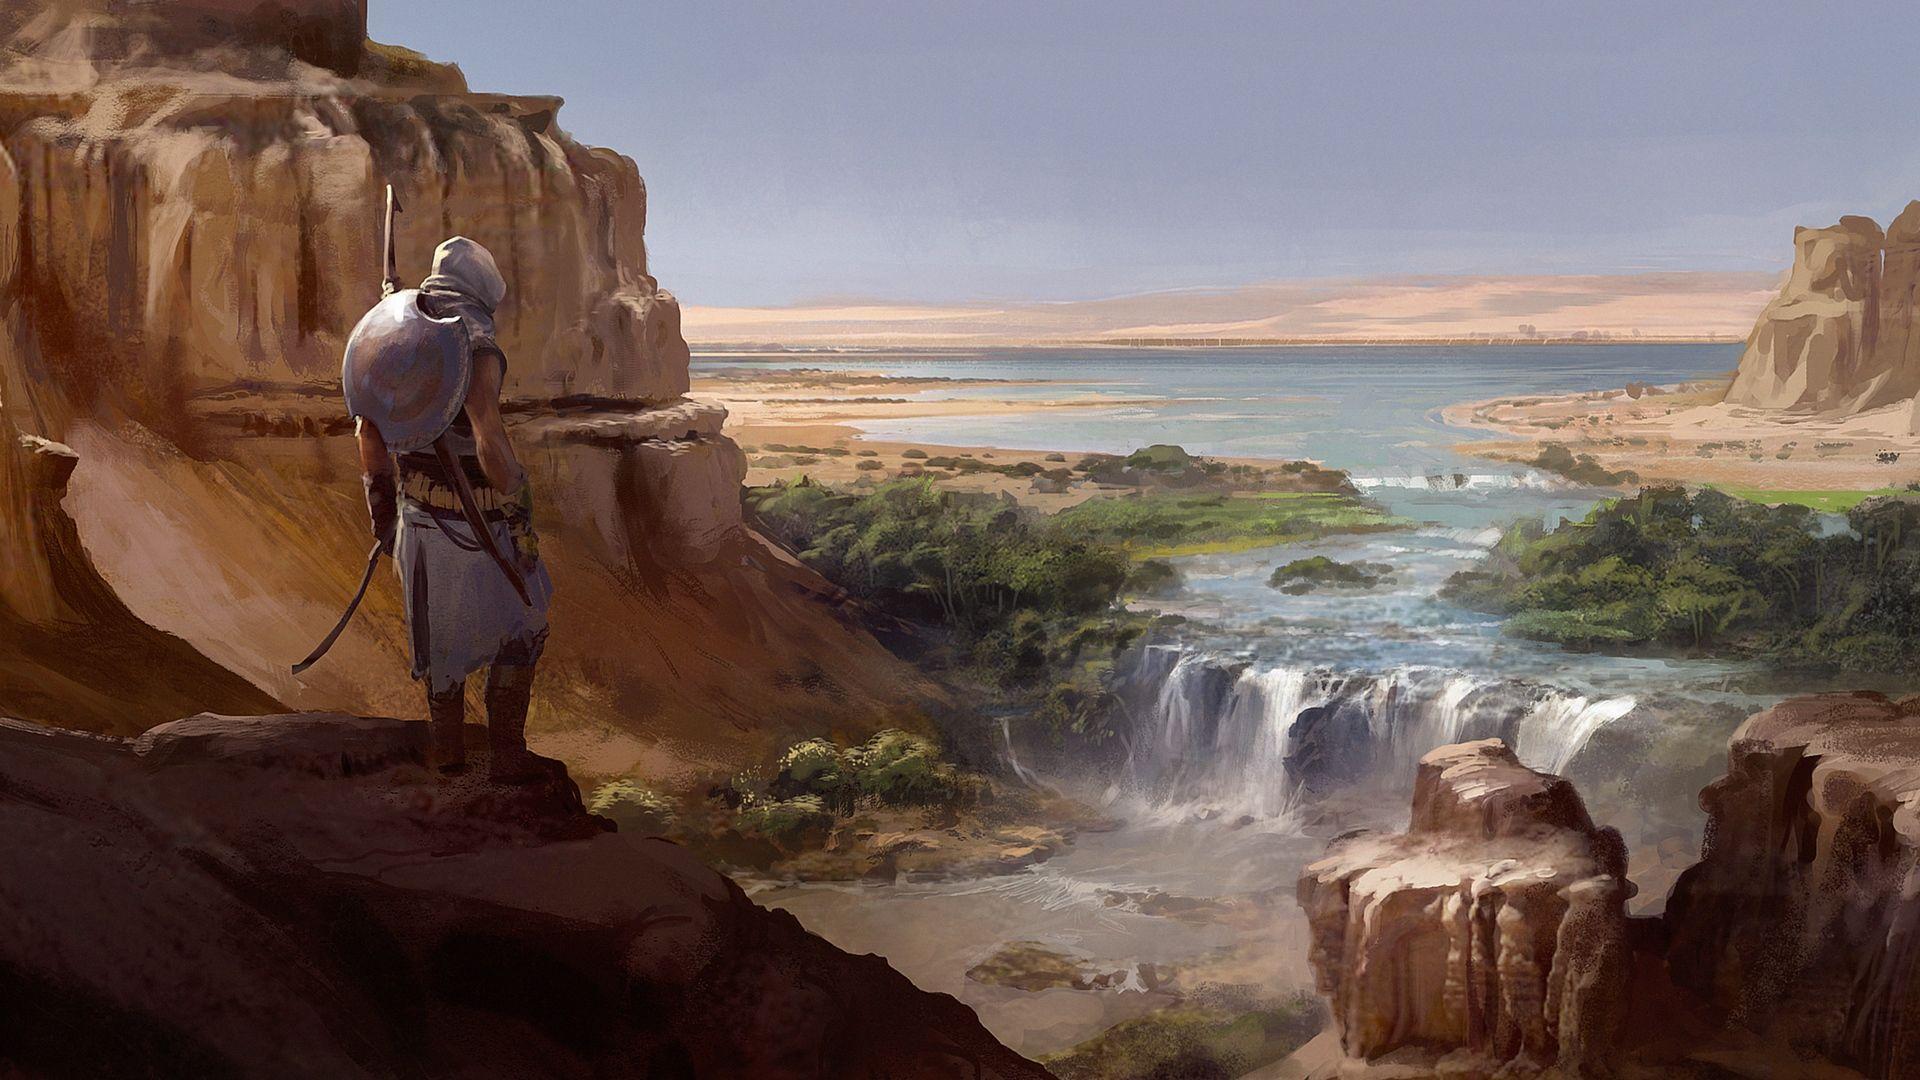 Assassins Creed: Origins (Game) Wallpaper